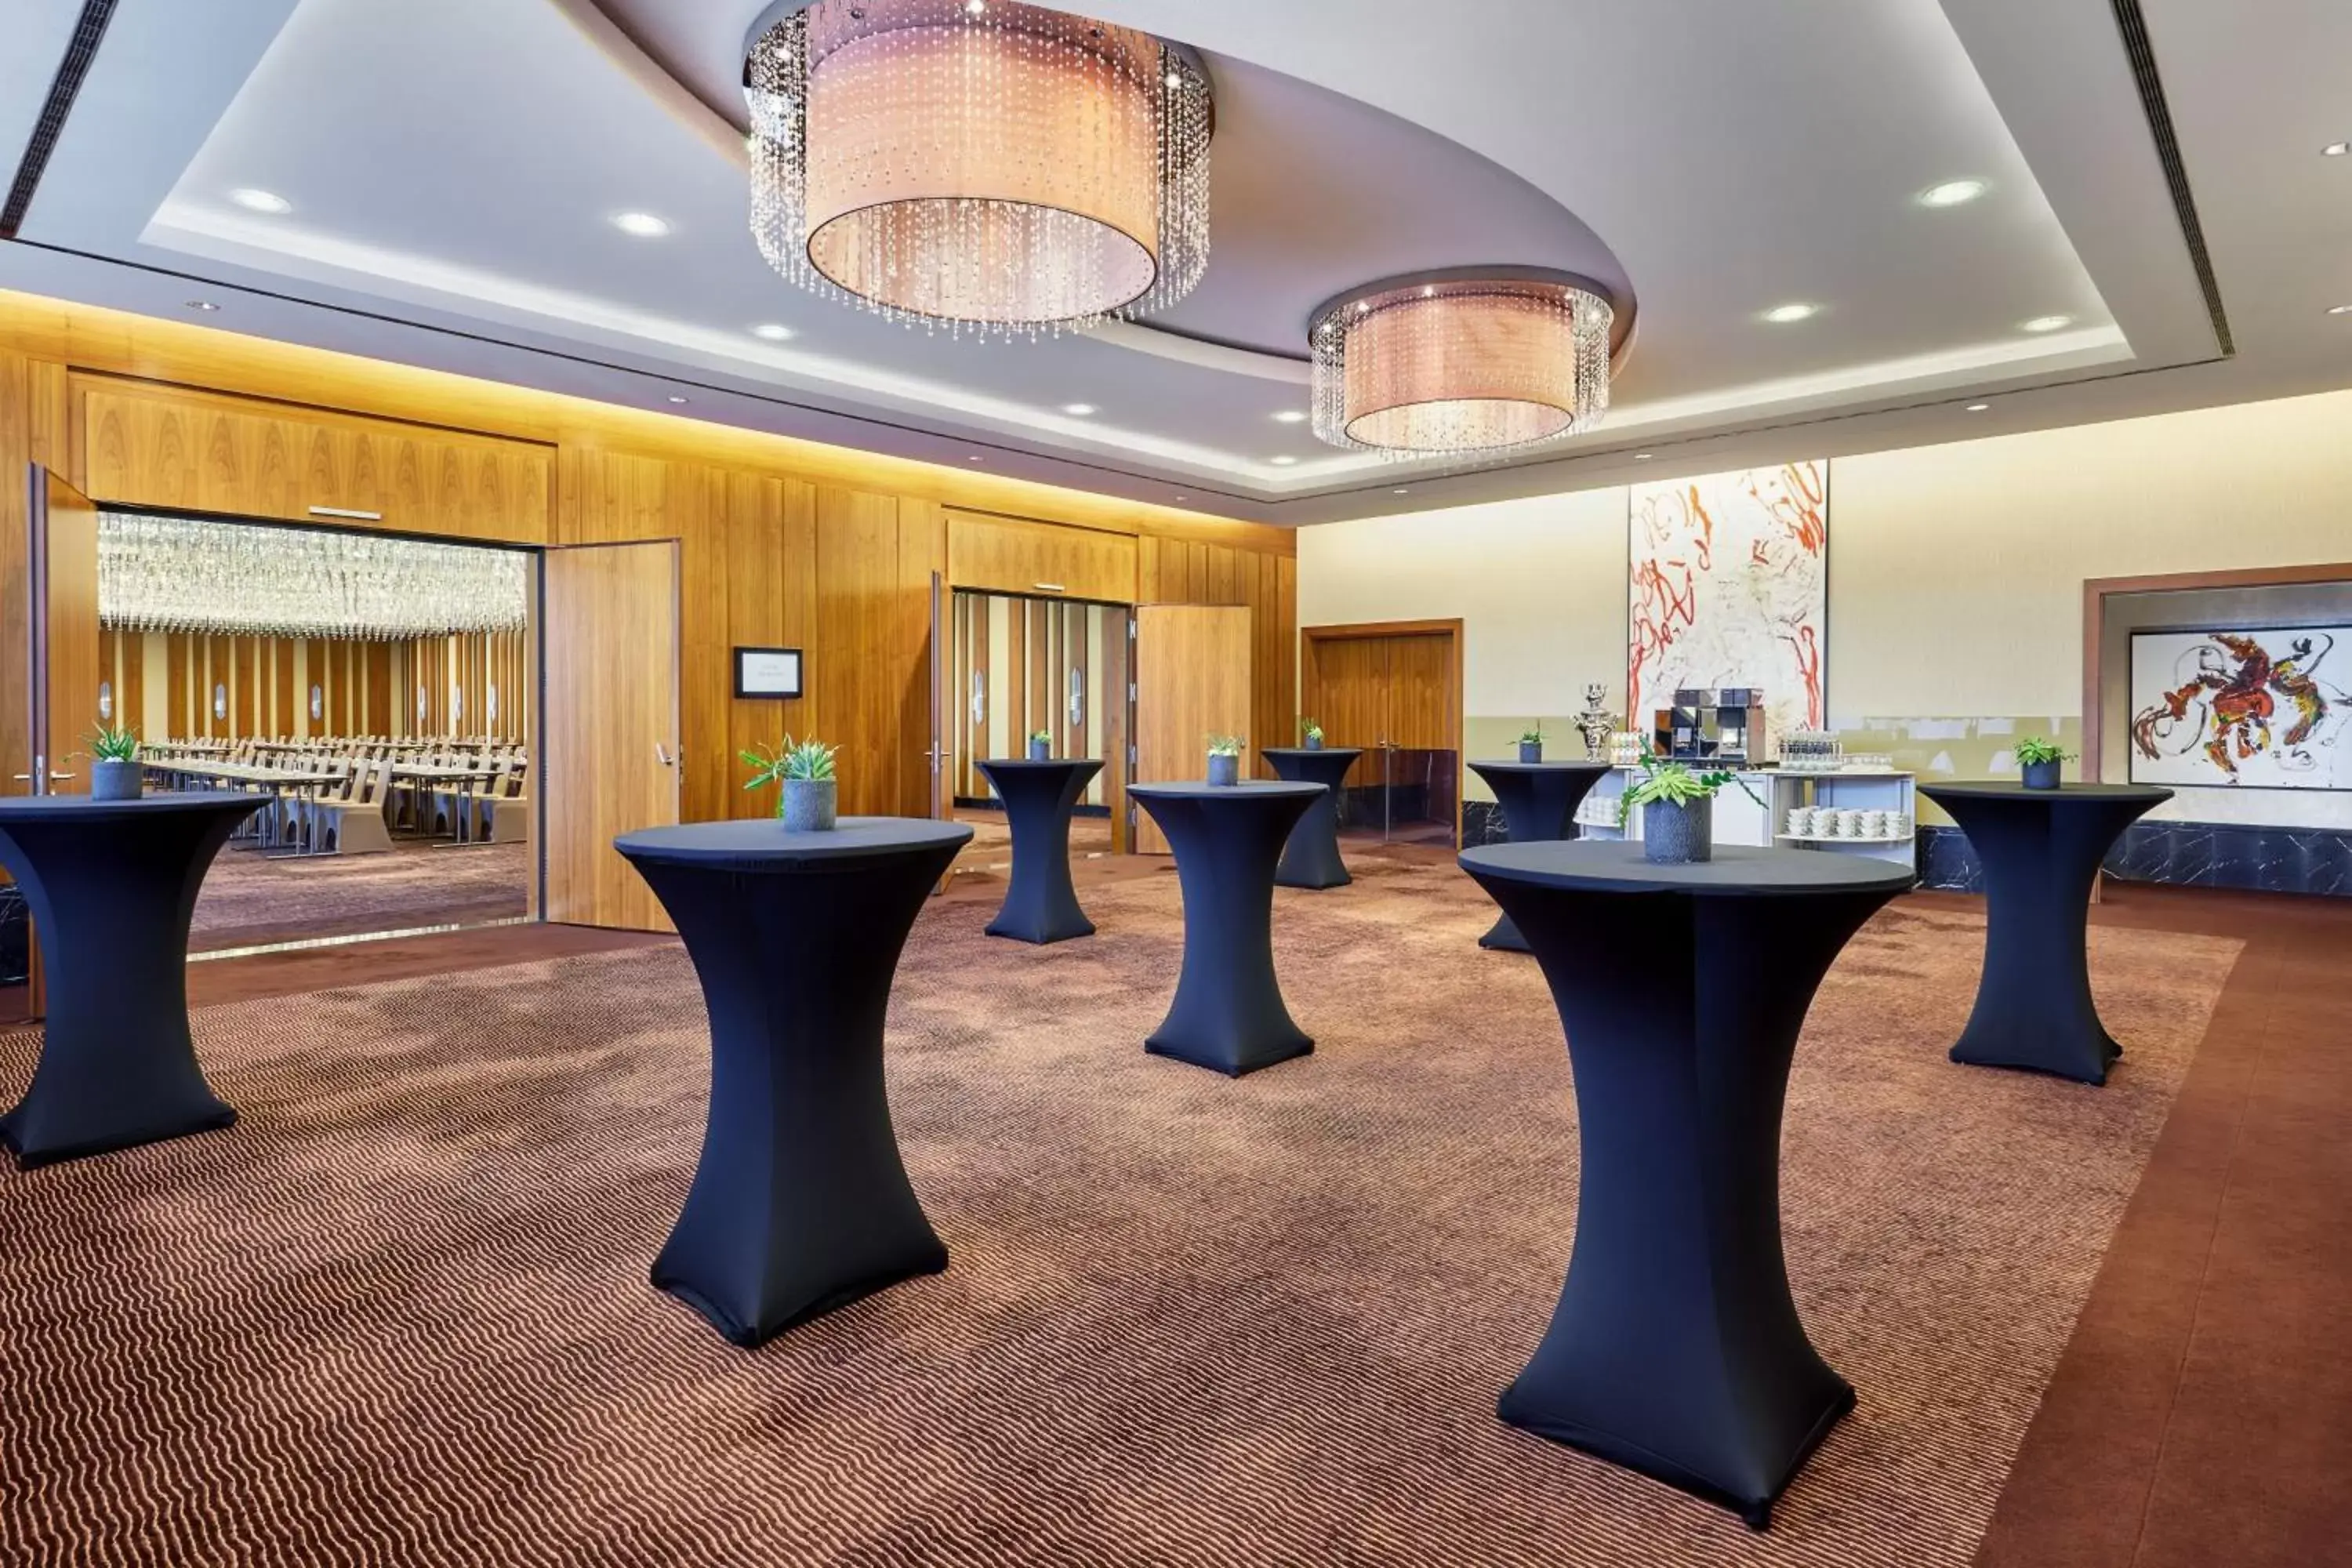 Meeting/conference room in JW Marriott Hotel Frankfurt